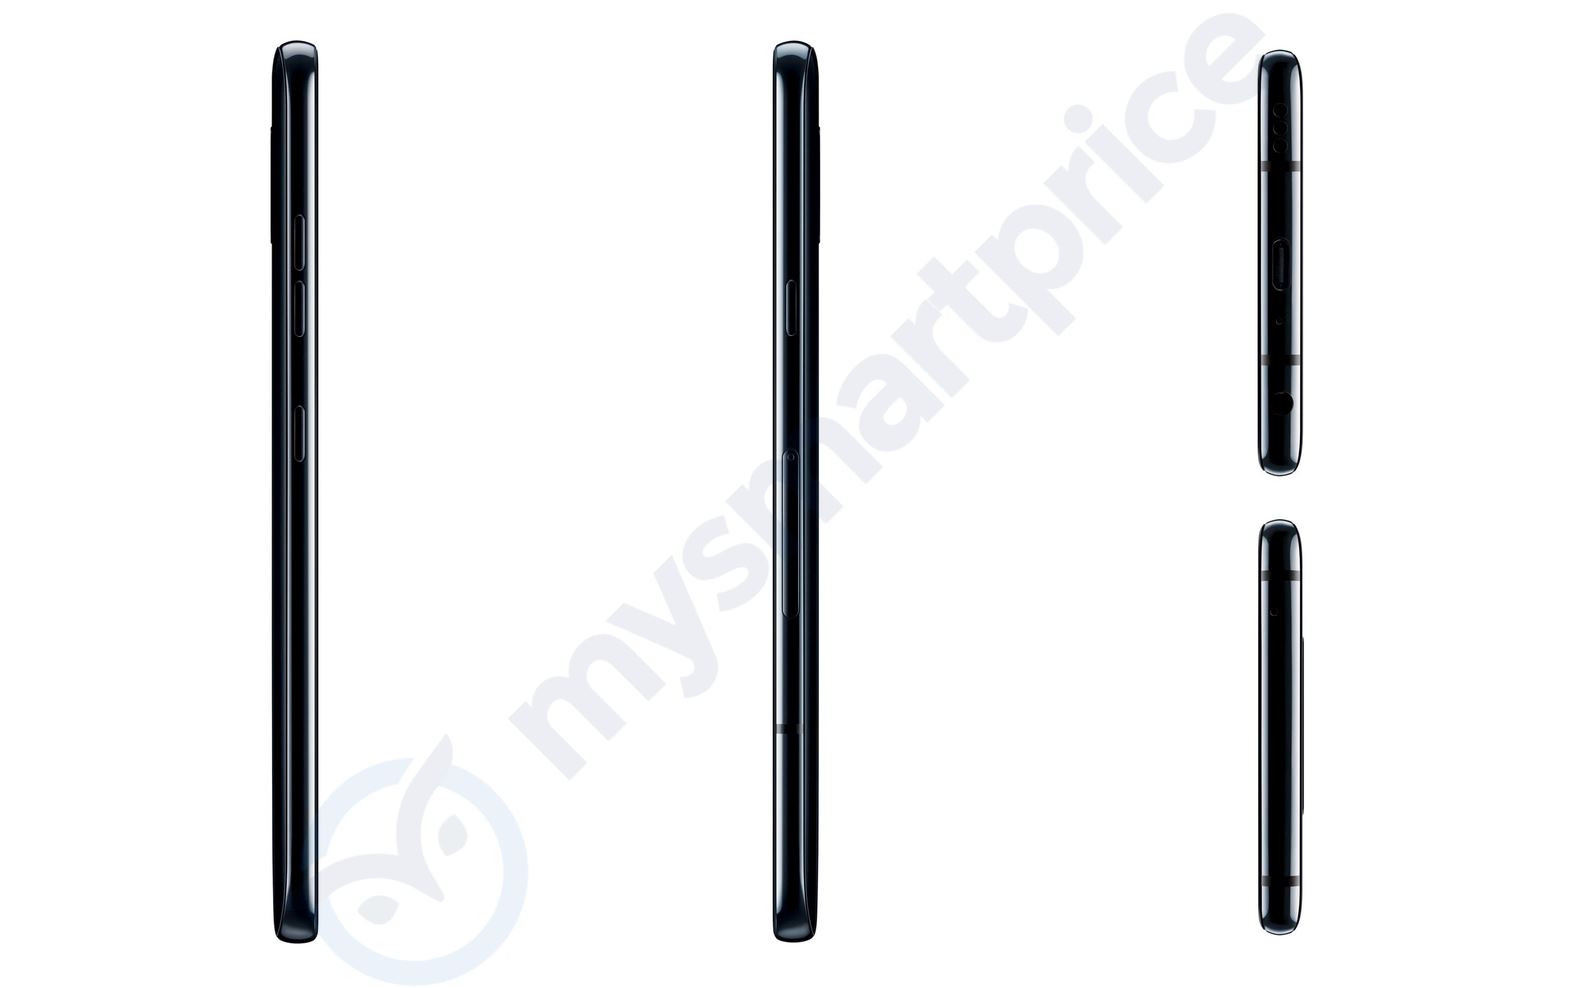 LG V40 ThinQ COPY iPhone X Huawei 2